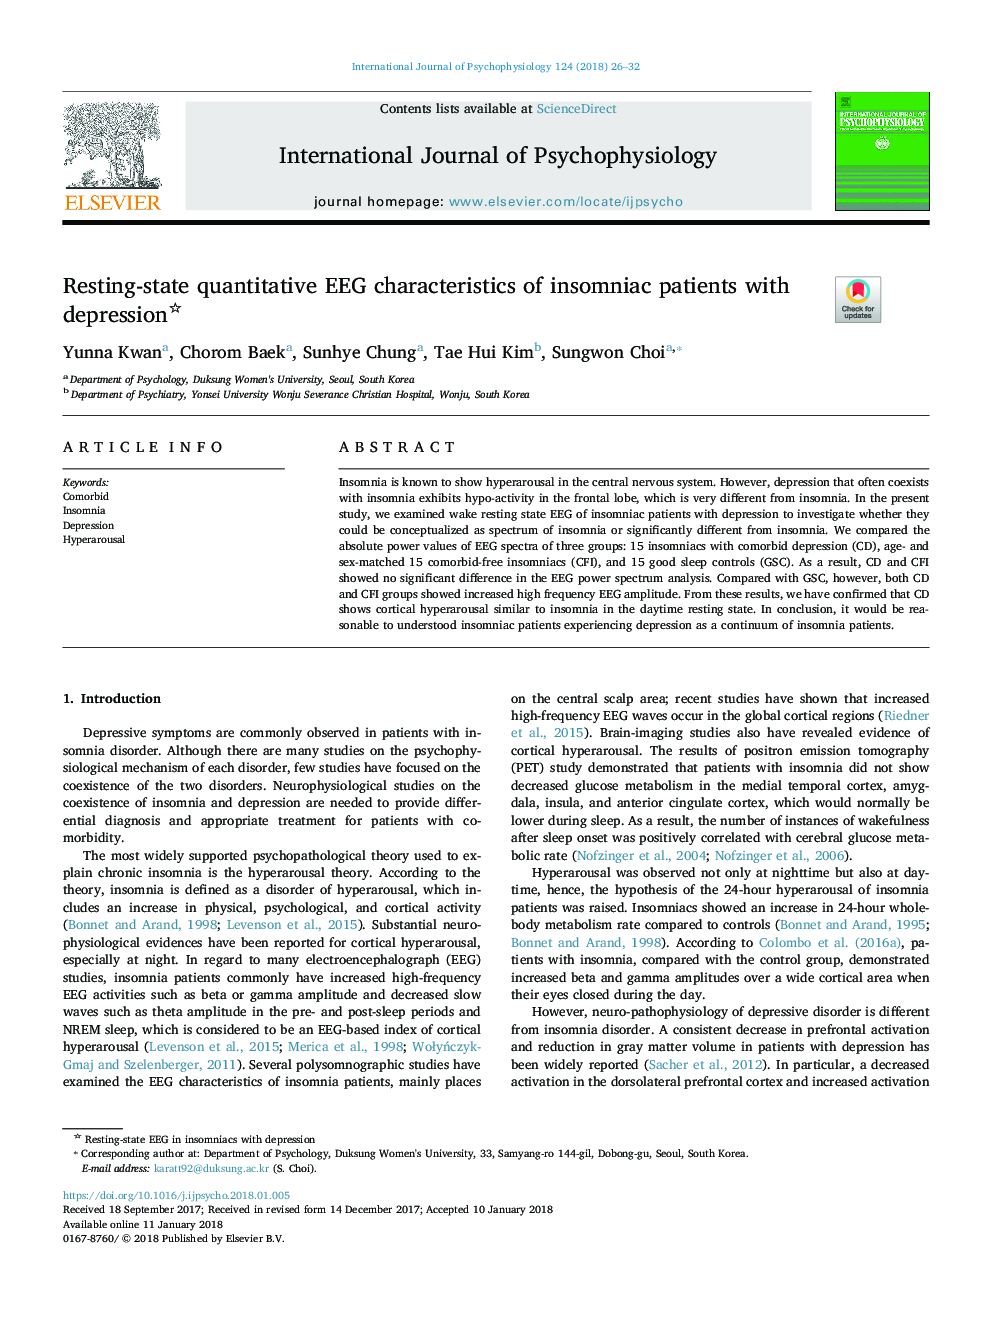 Resting-state quantitative EEG characteristics of insomniac patients with depression